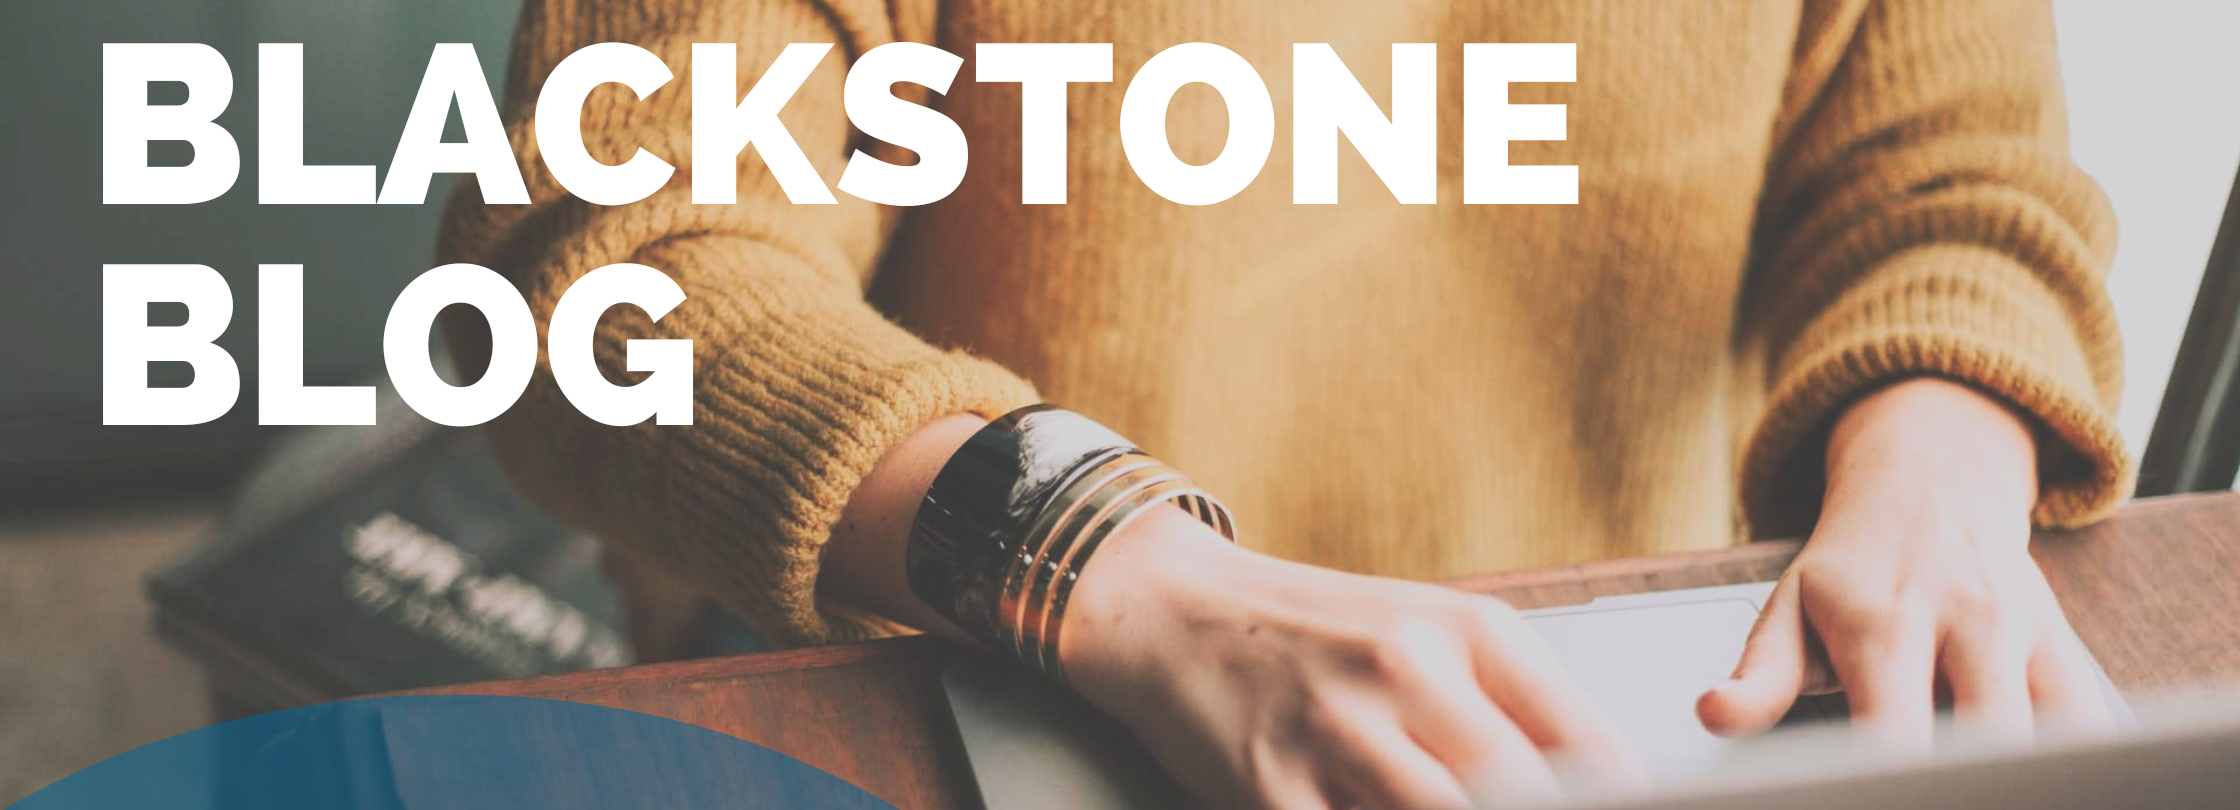 Blackstone Blog